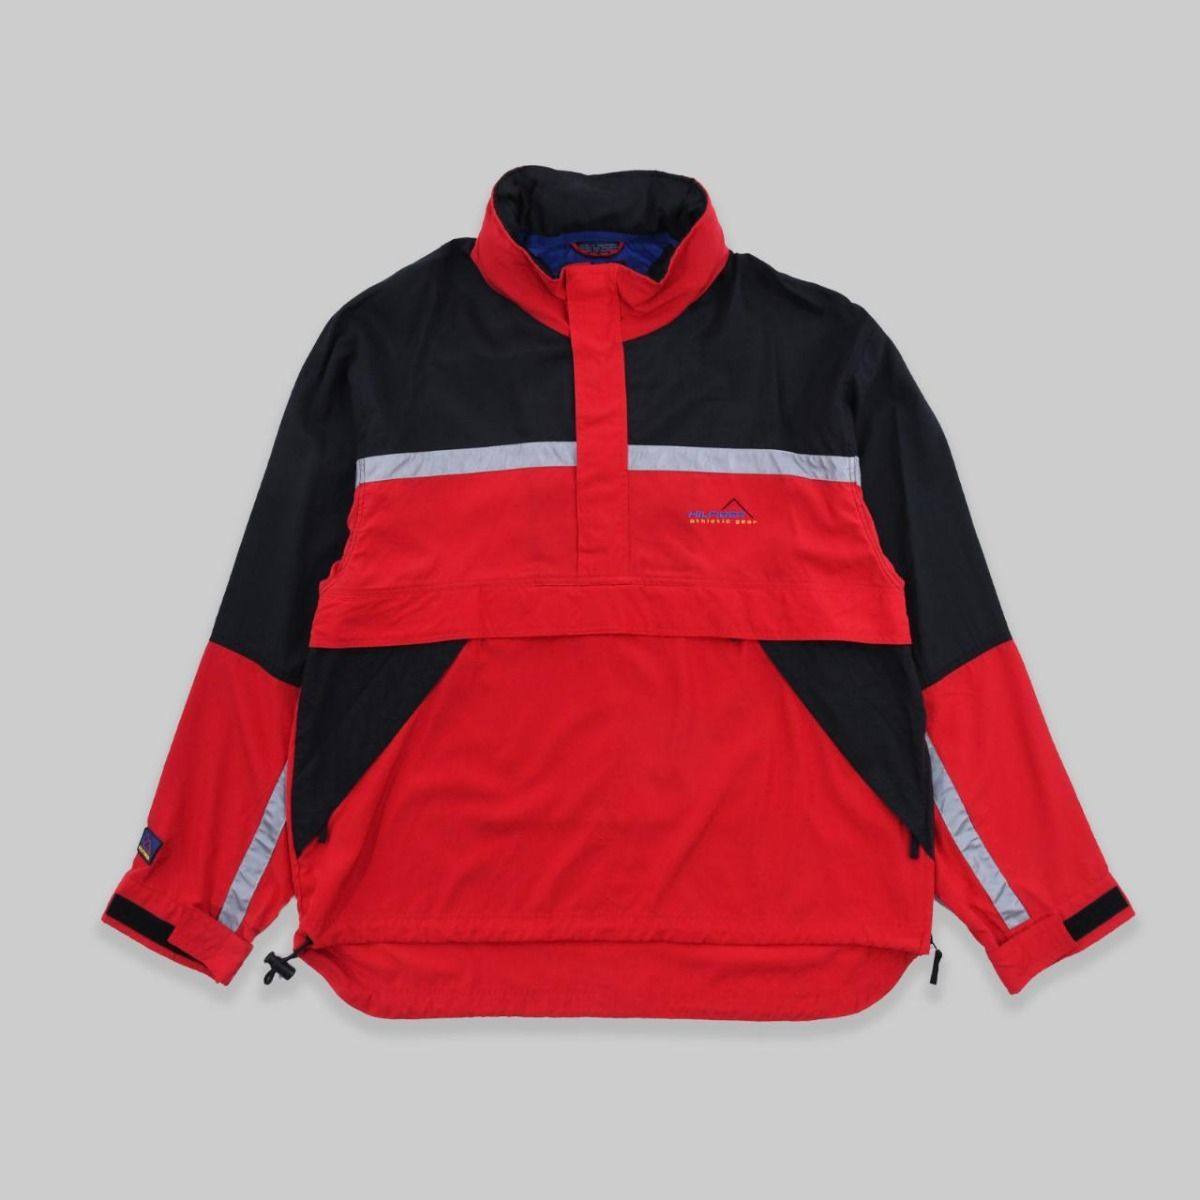 Tommy Hilfiger Red & Black Athletic Gear Jacket